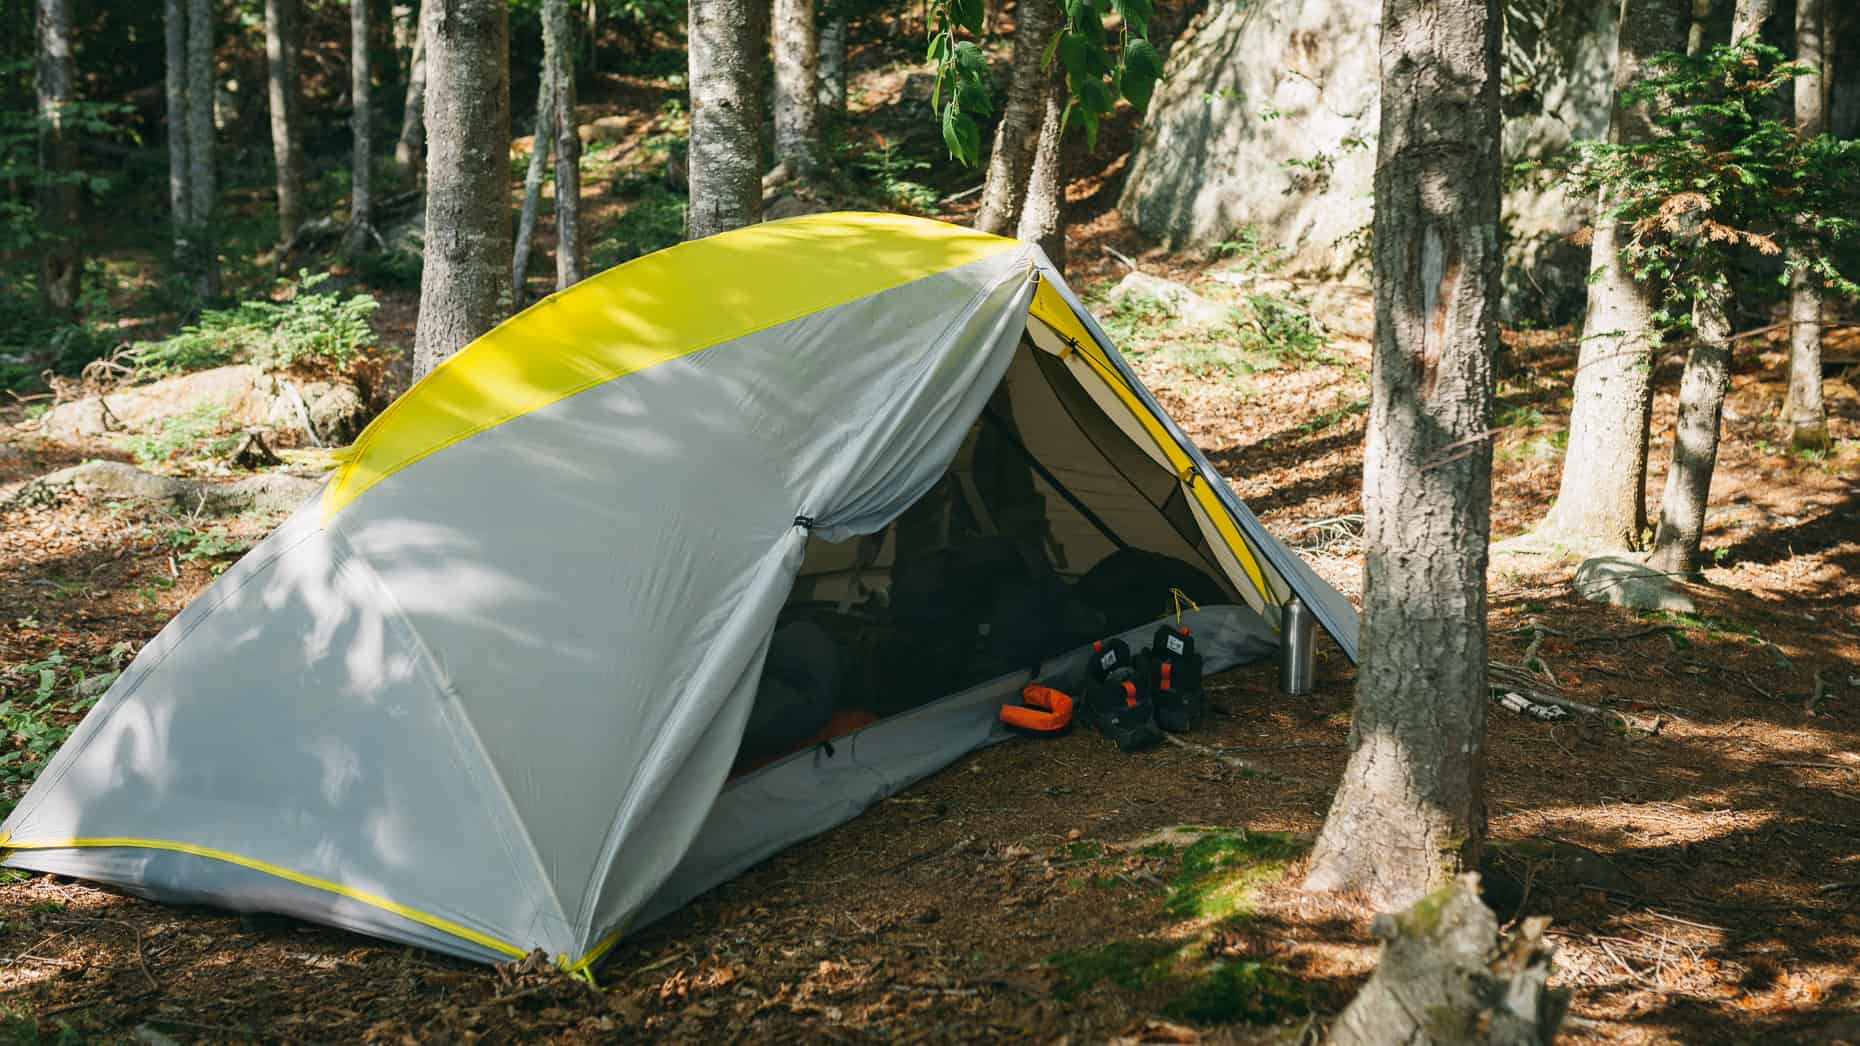 LL Bean Microlight tent.